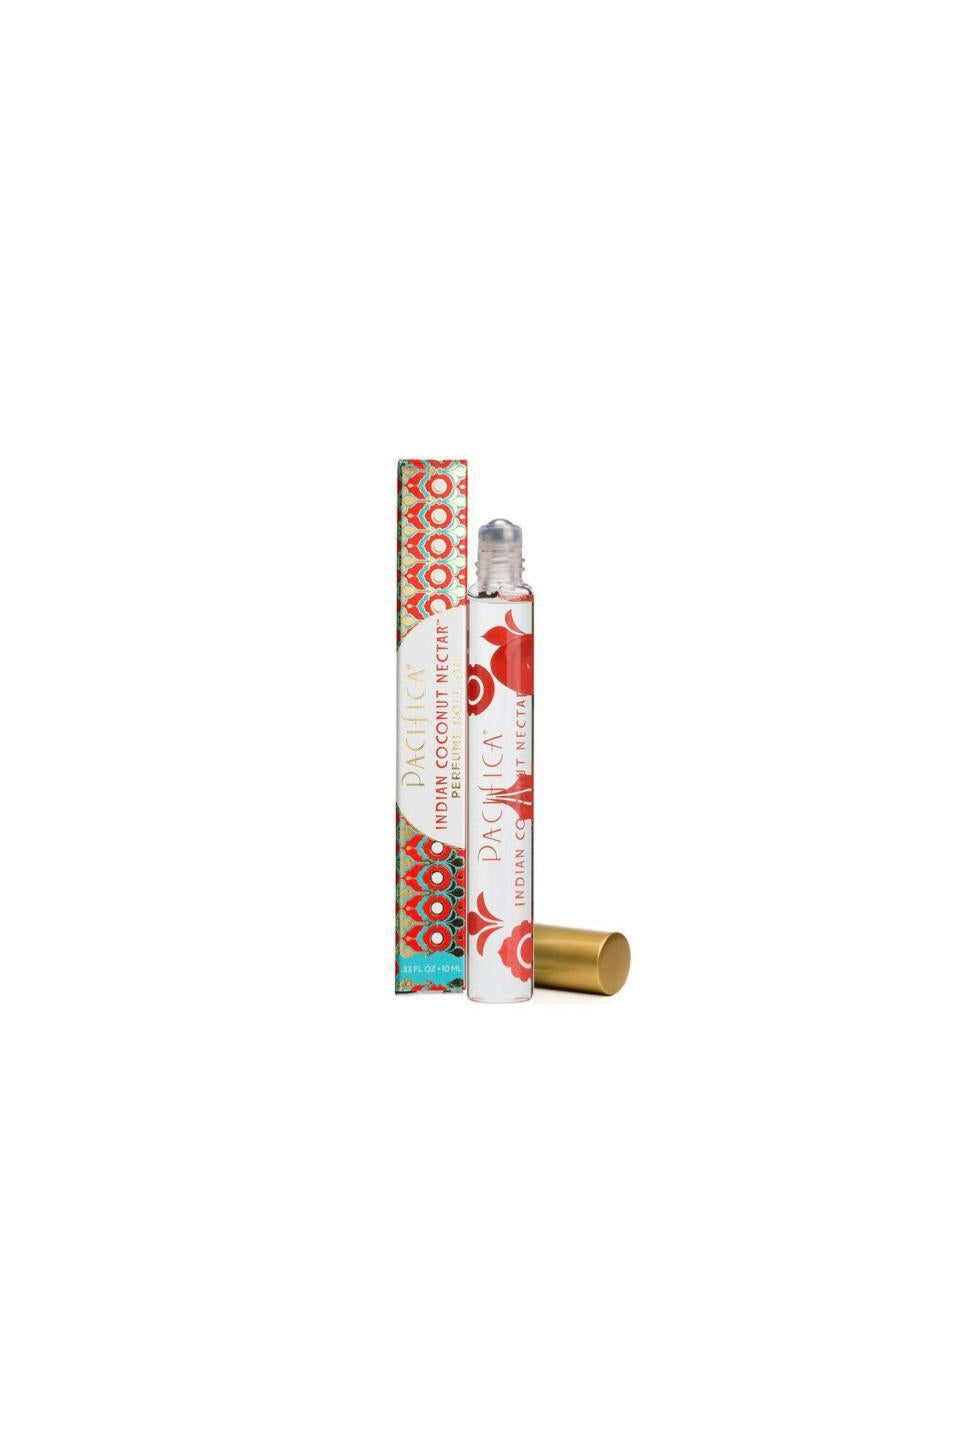 Pacifica Coconut Nectar Roll-on Perfume 10ml